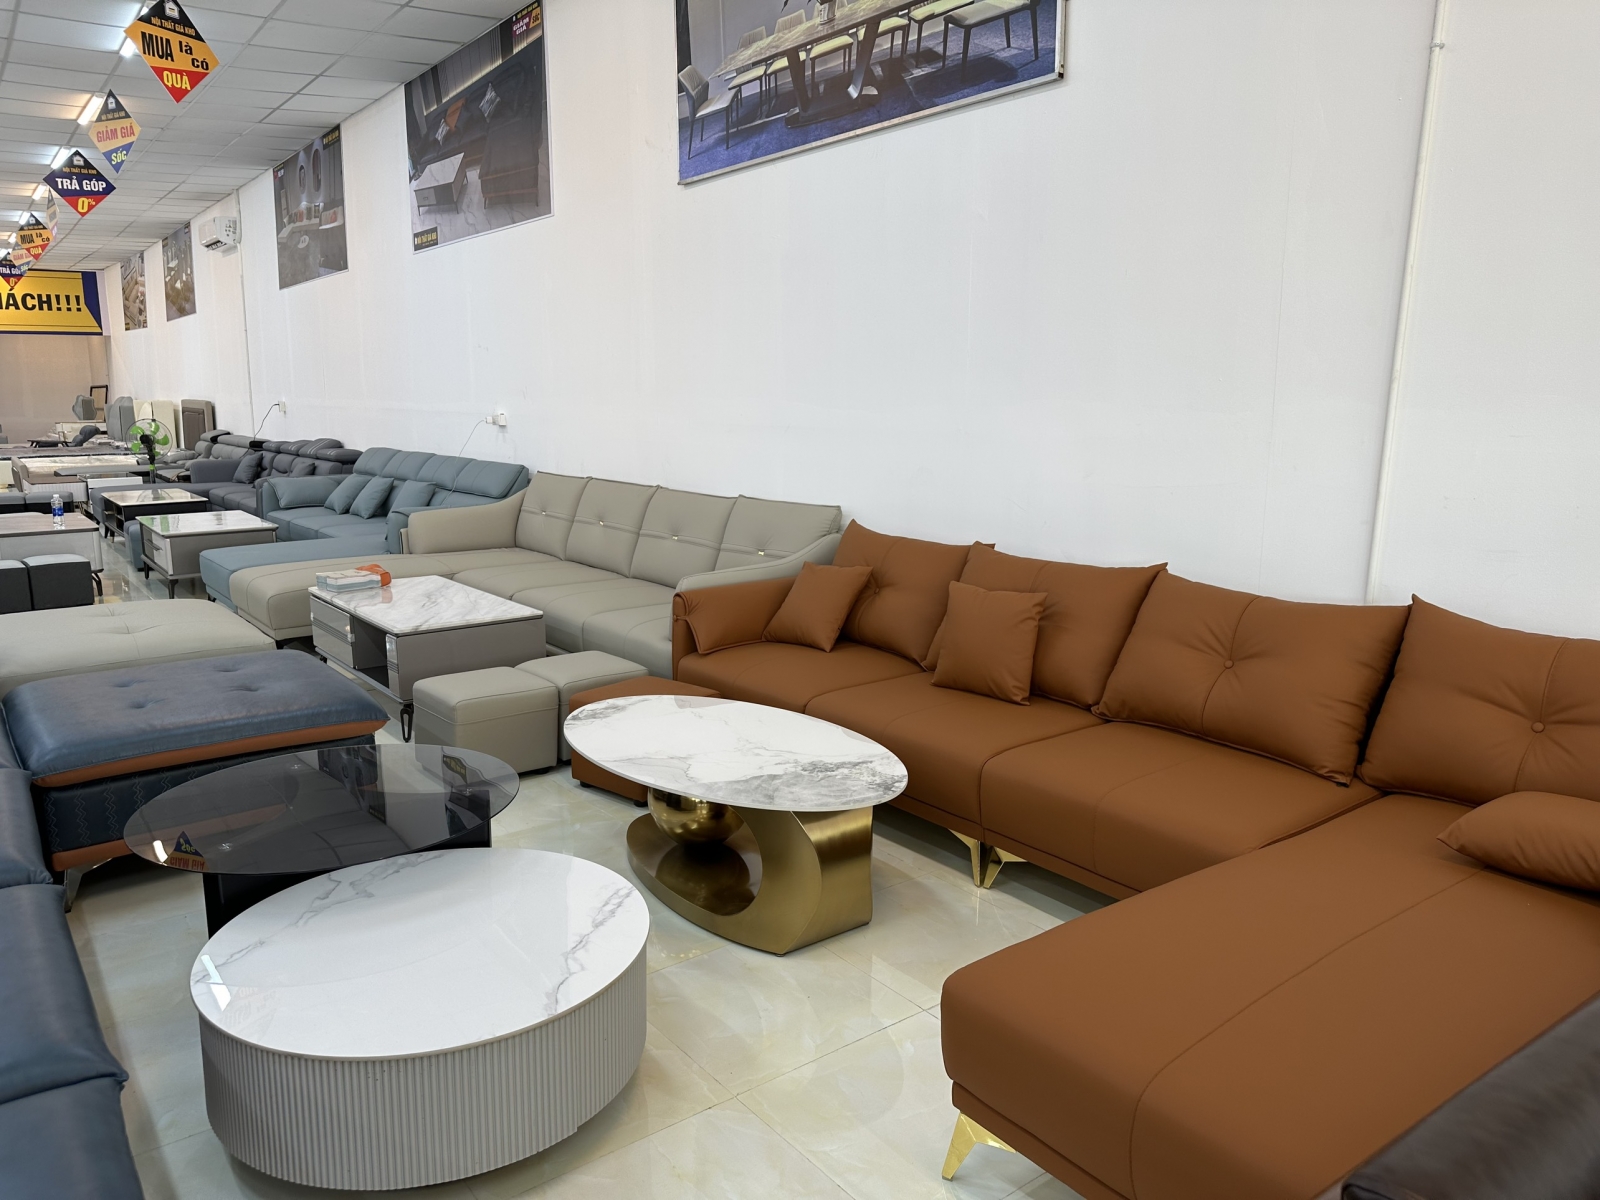 Mua sofa giá rẻ tại Tiền Giang